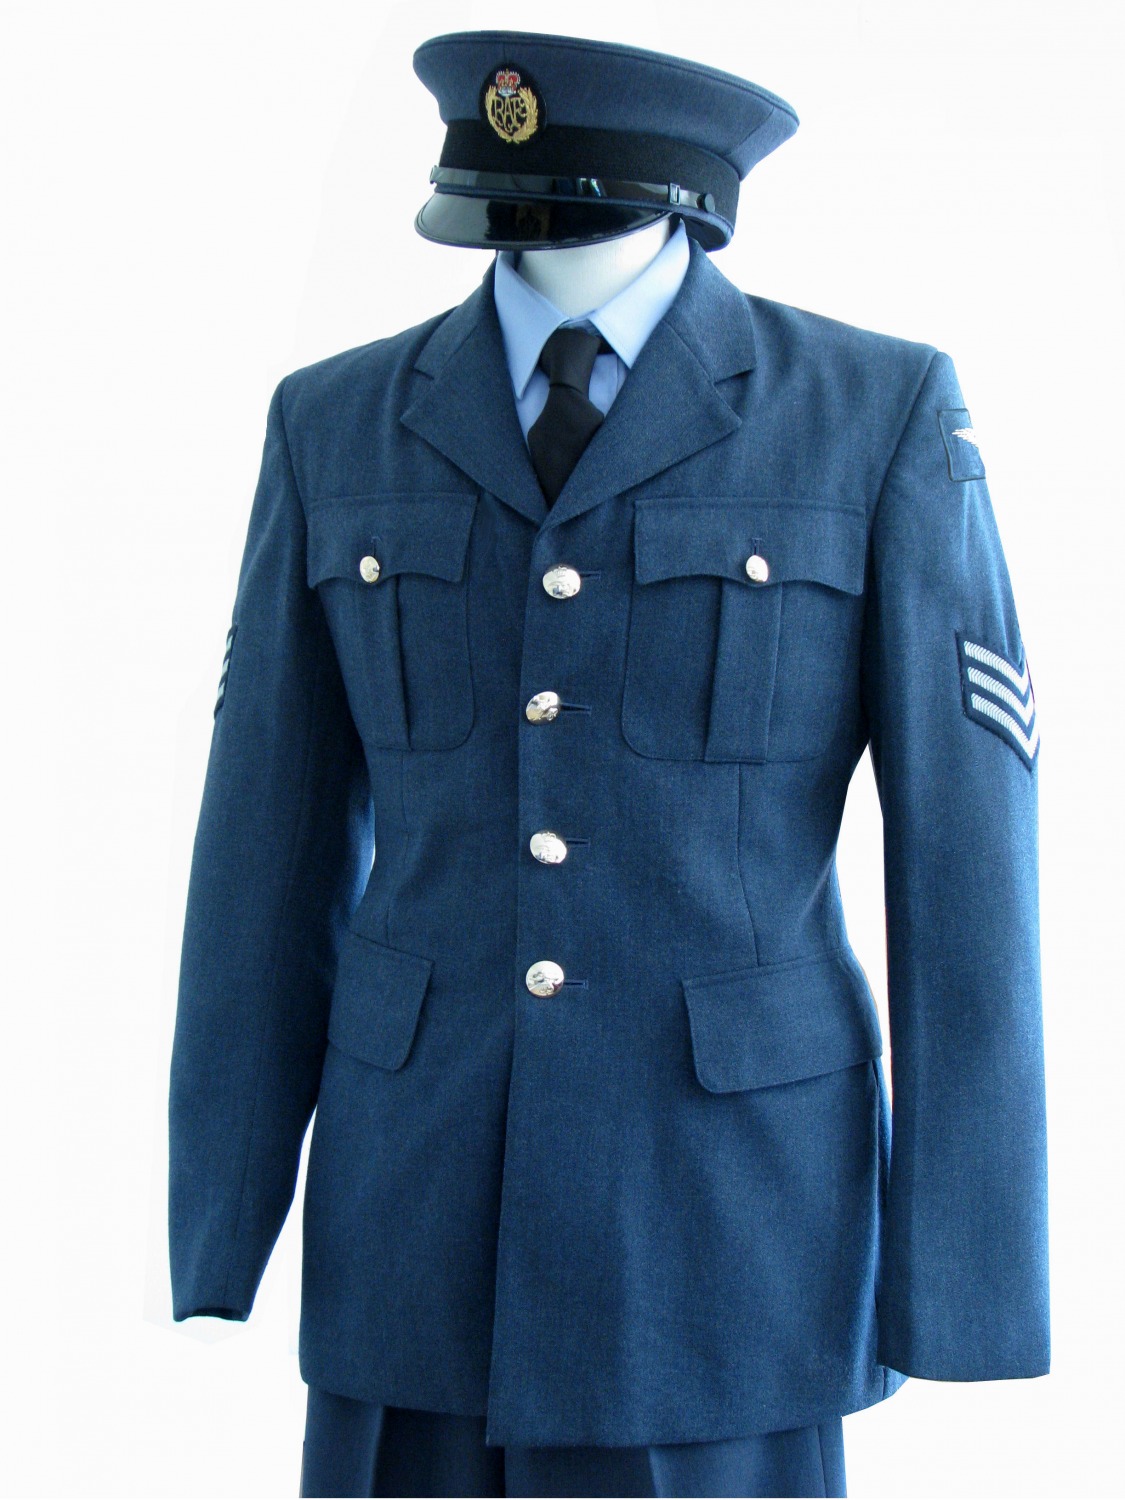 Men's 1940s Wartime RAF Uniform Jacket Chest 36"  Image